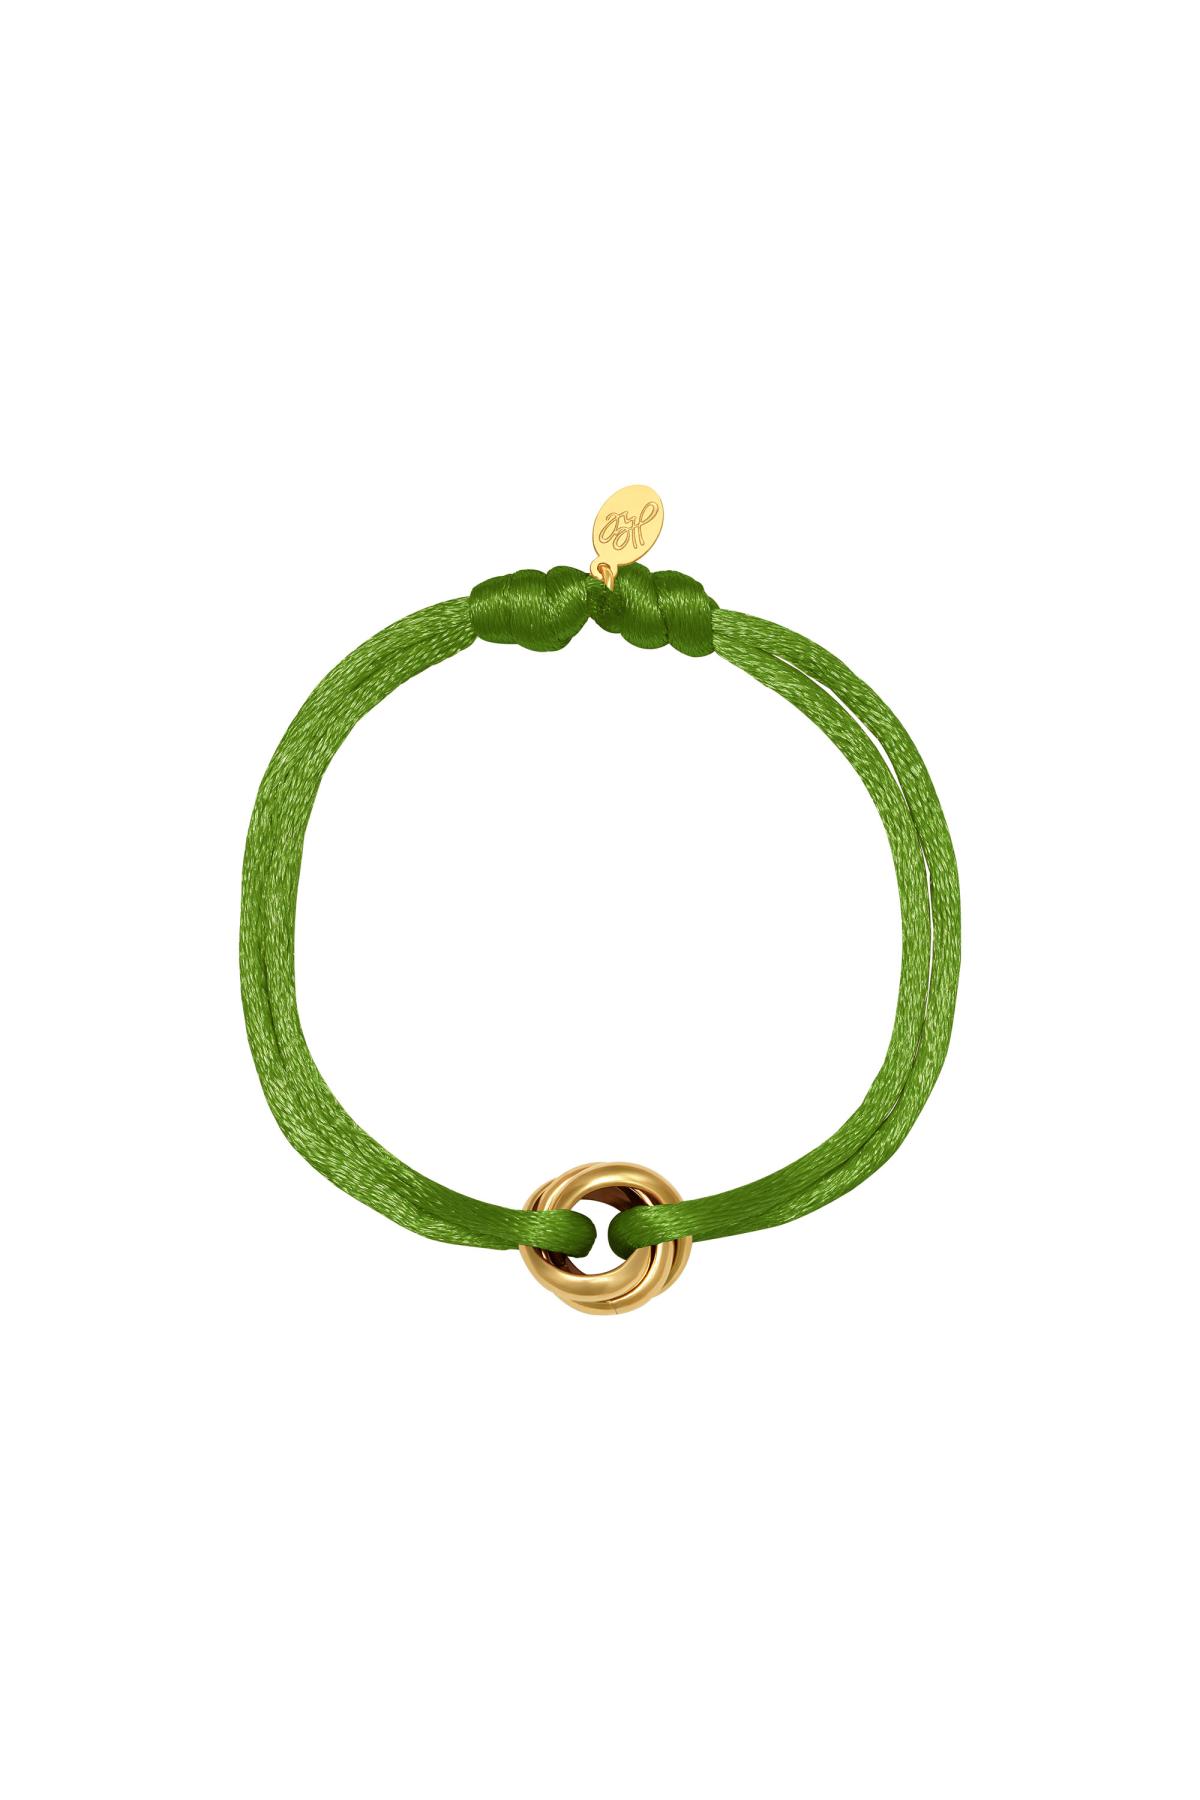 Verde oliva / Pulsera Satin Knot Verde oliva Acero inoxidable Imagen16